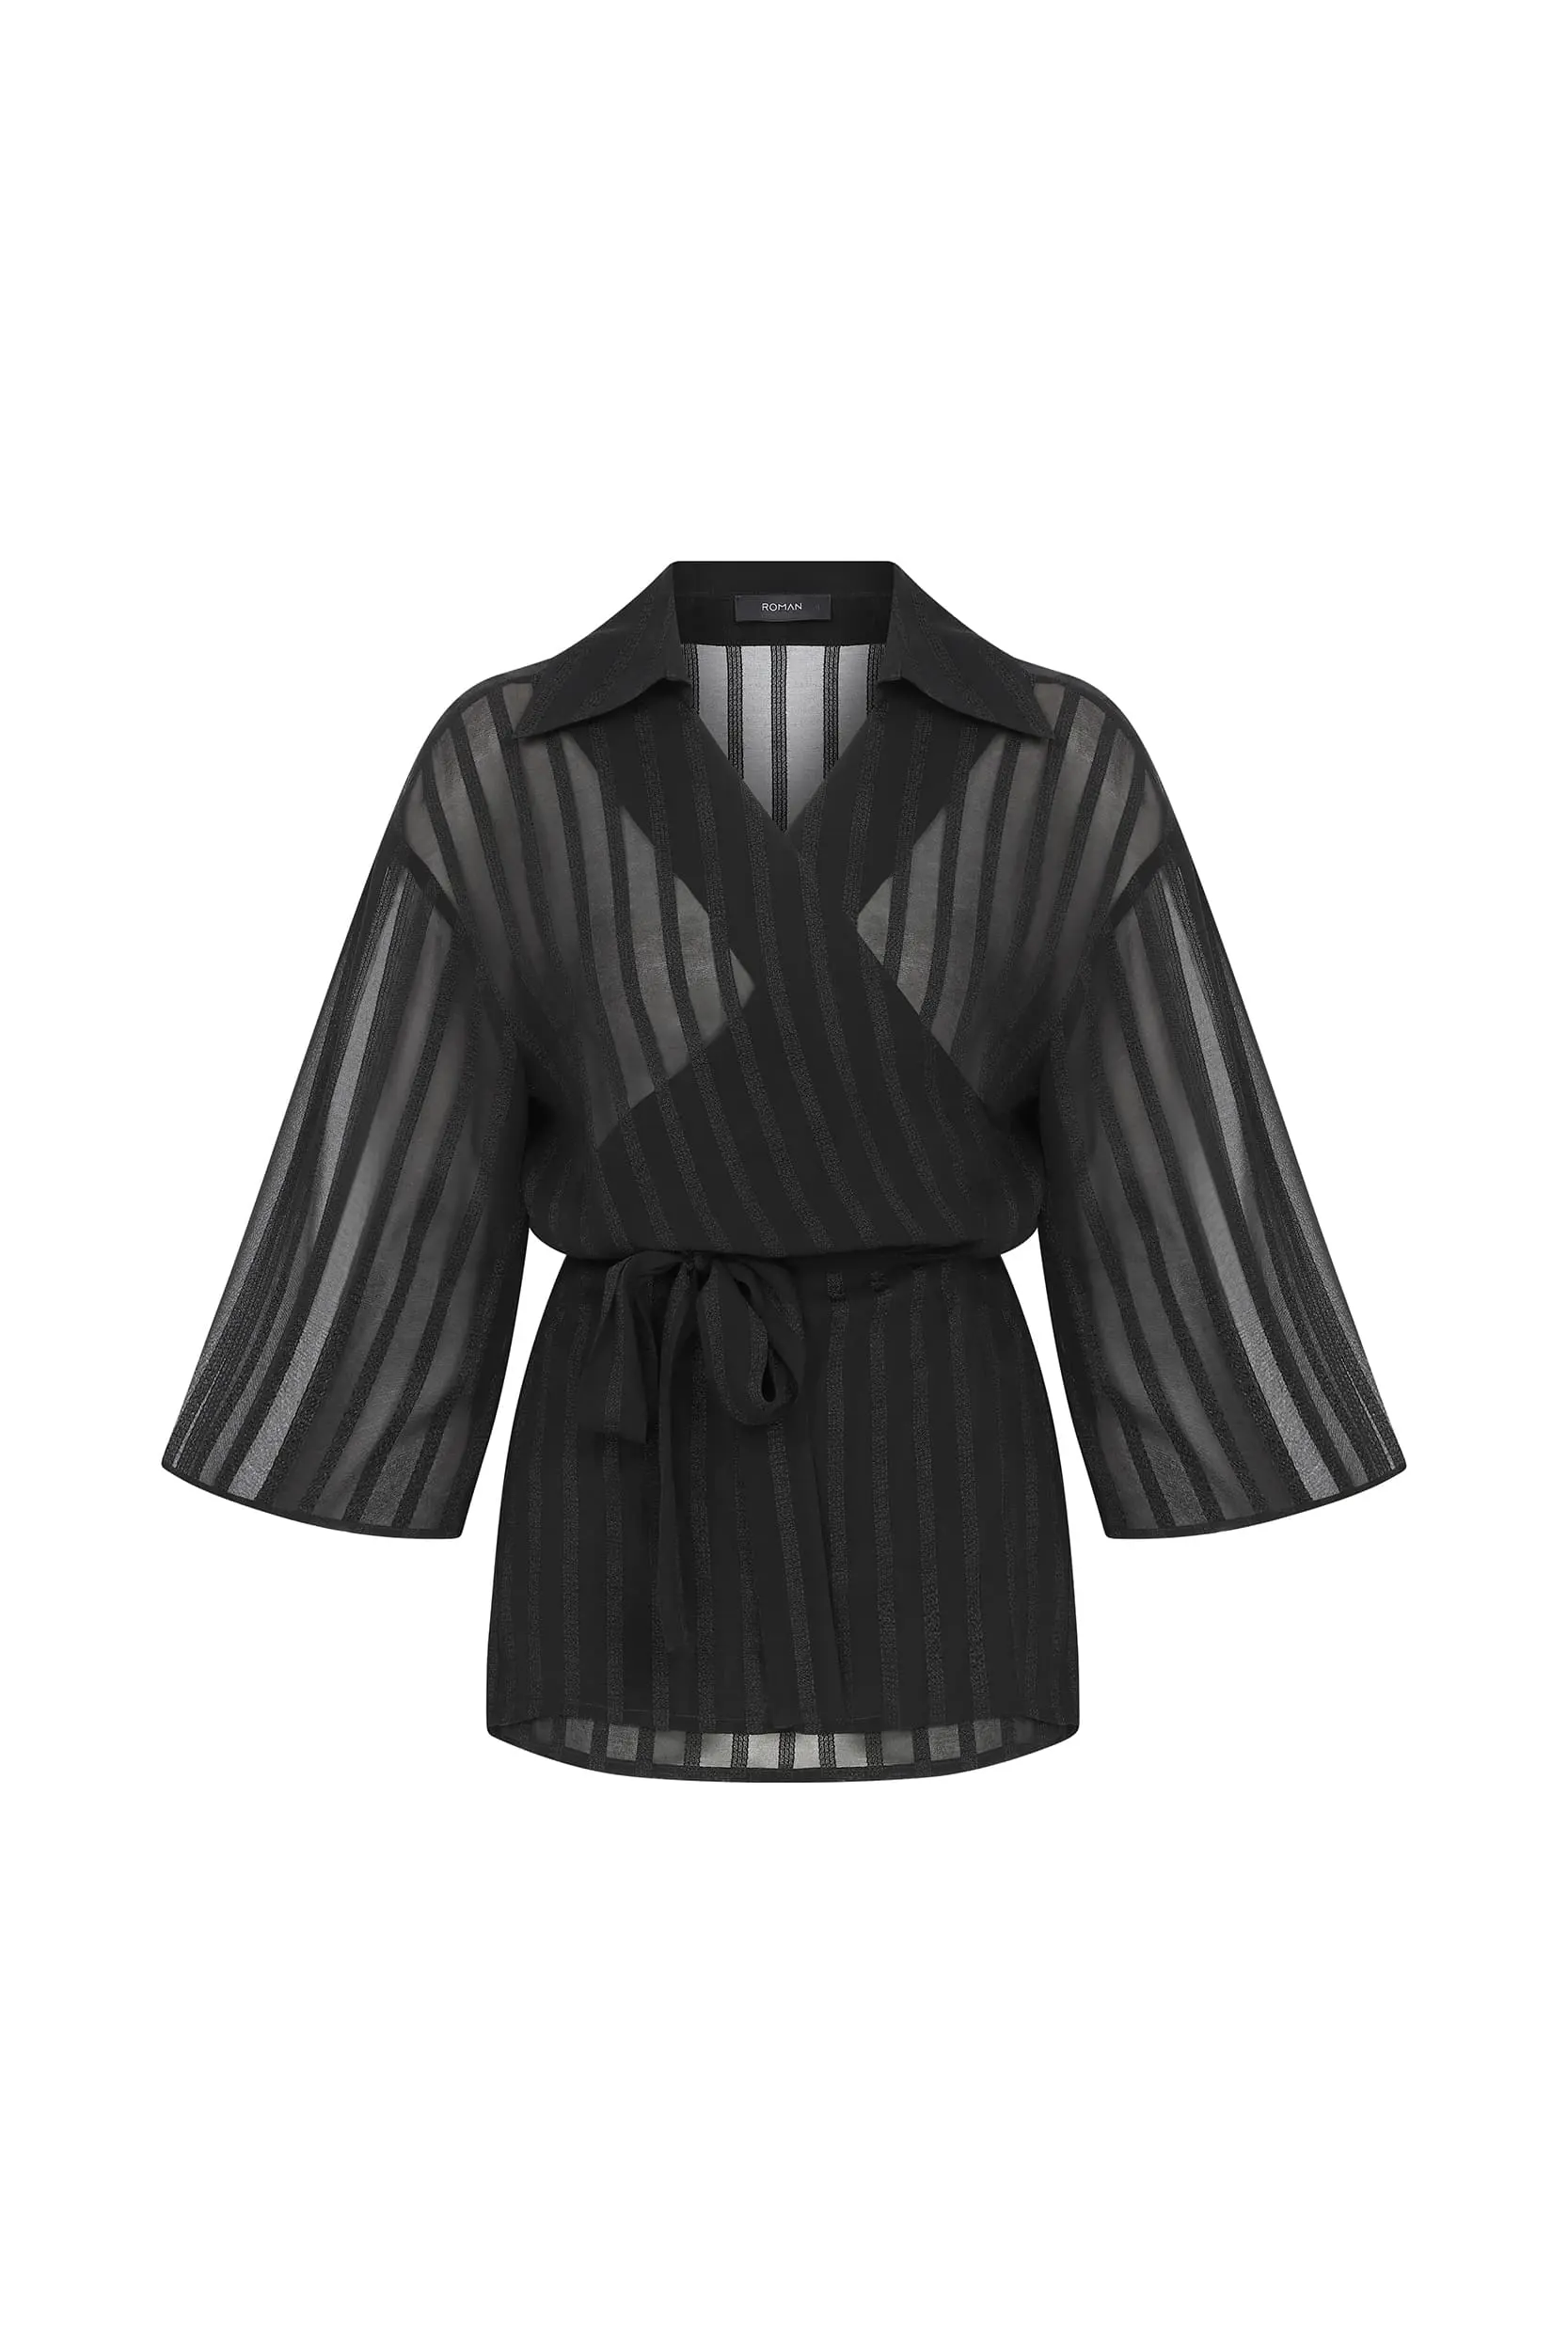 Roman Kimono Sheer Black Women's Shirt - 4 / Black. 1